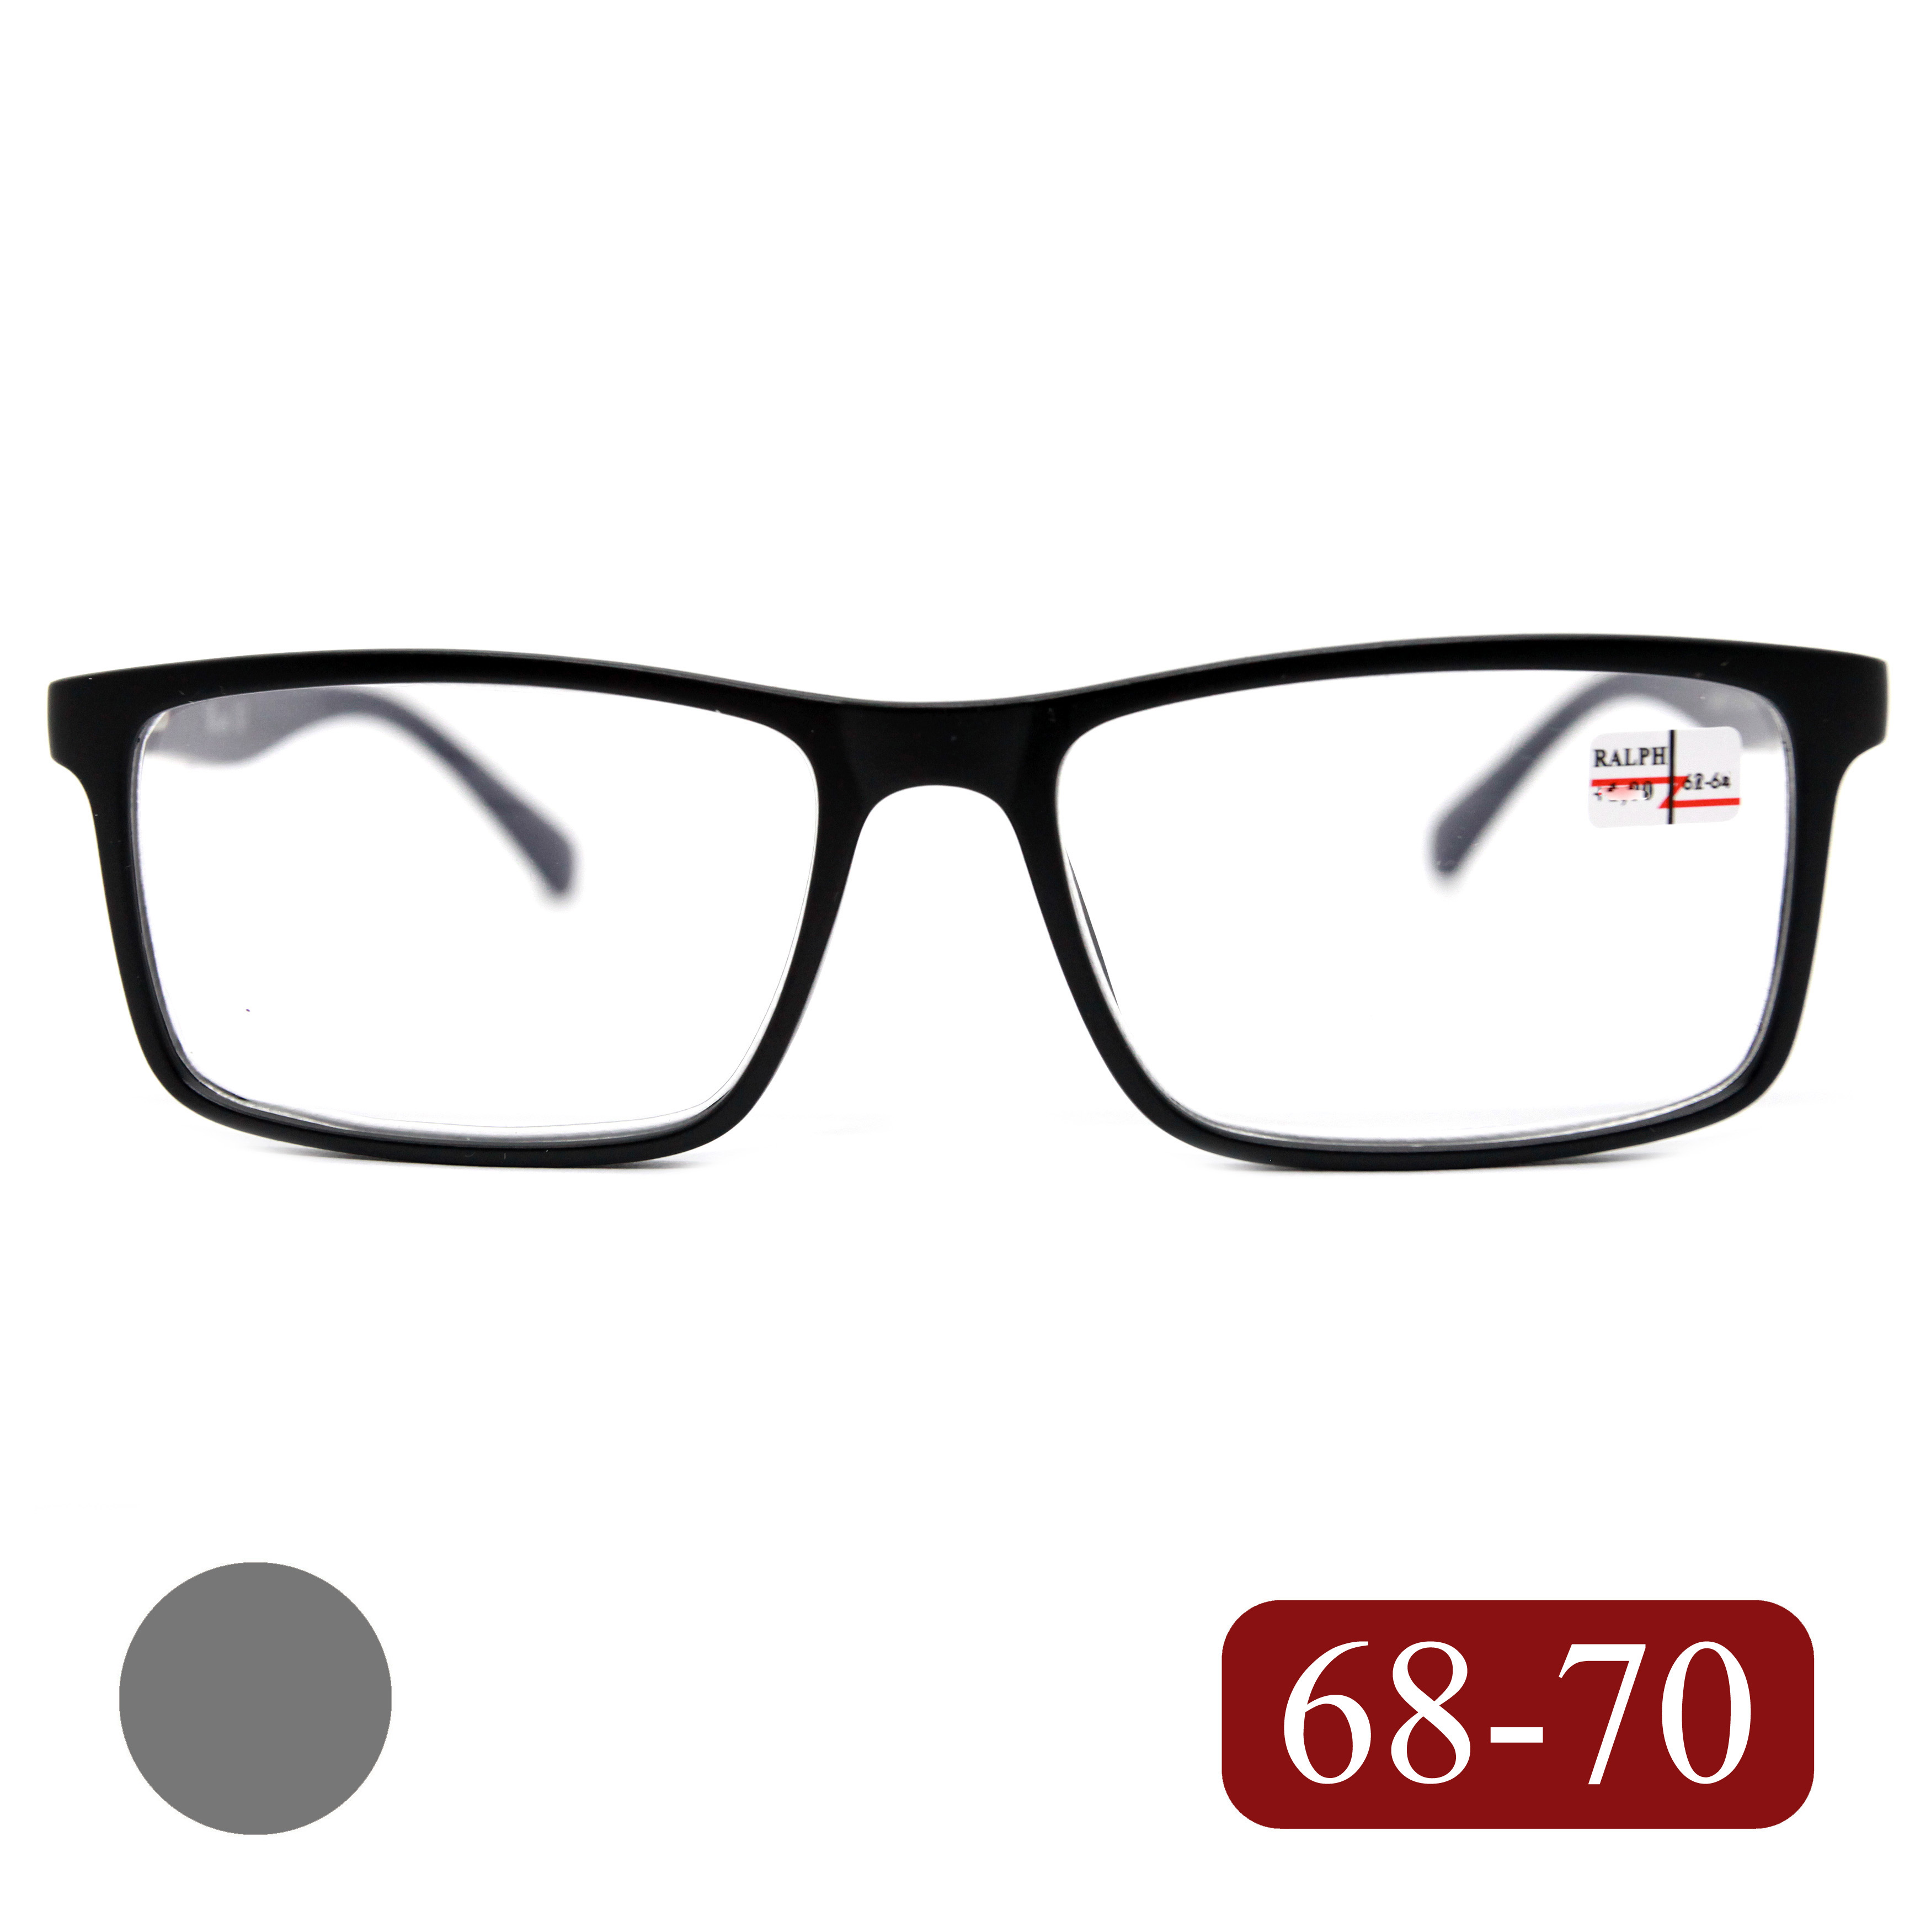 Готовые очки RALPH 0682 +2,25, без футляра, черно-серый, РЦ 68-70